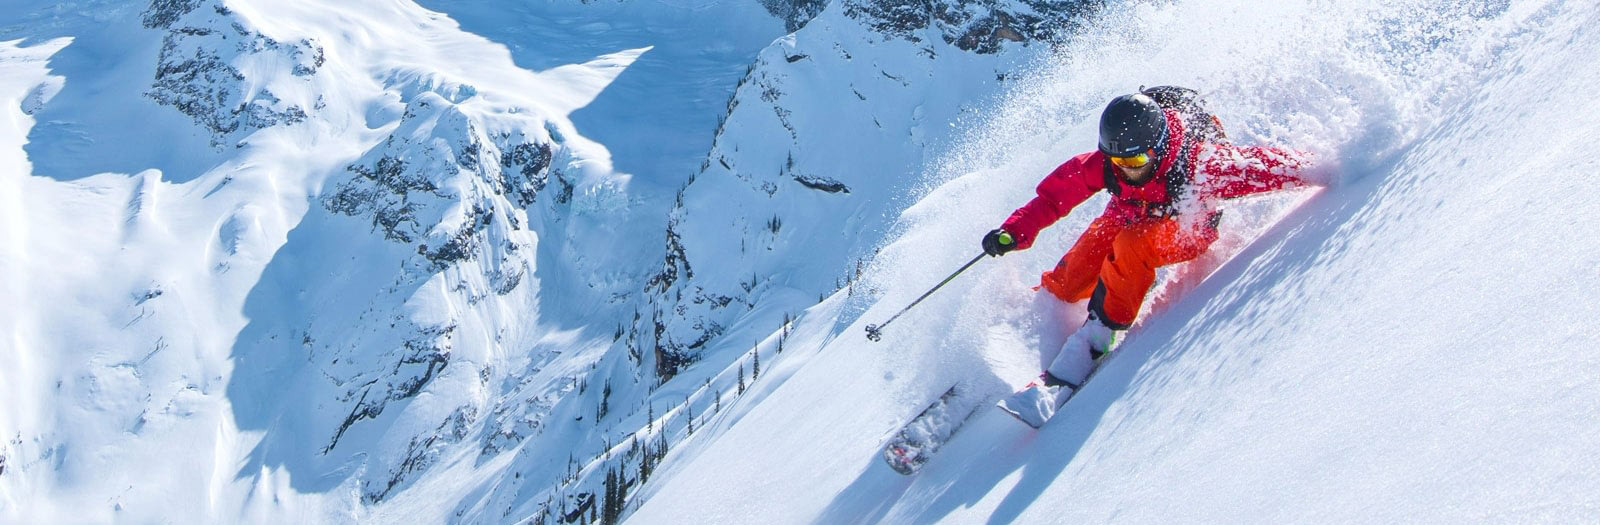 CMH Heli Skiing, Banff Heli Skiing, Canadian Mountain Holidays